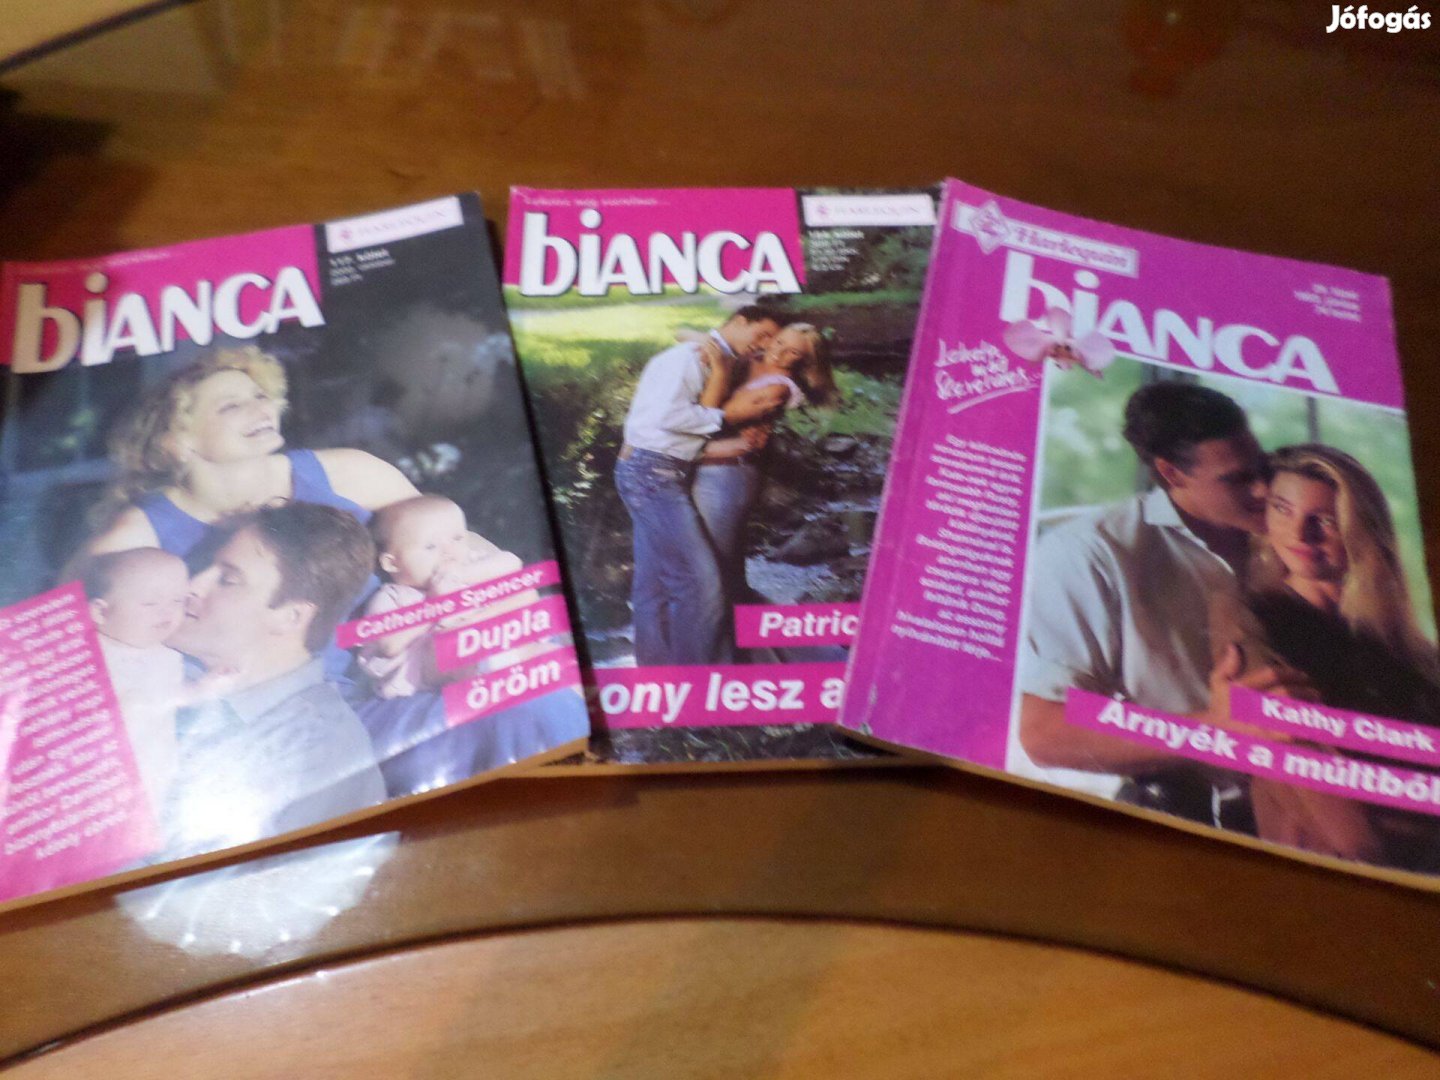 Bianca 2000 117 Carherina Spencer Dupla öröm 3 db egyben Romantikus